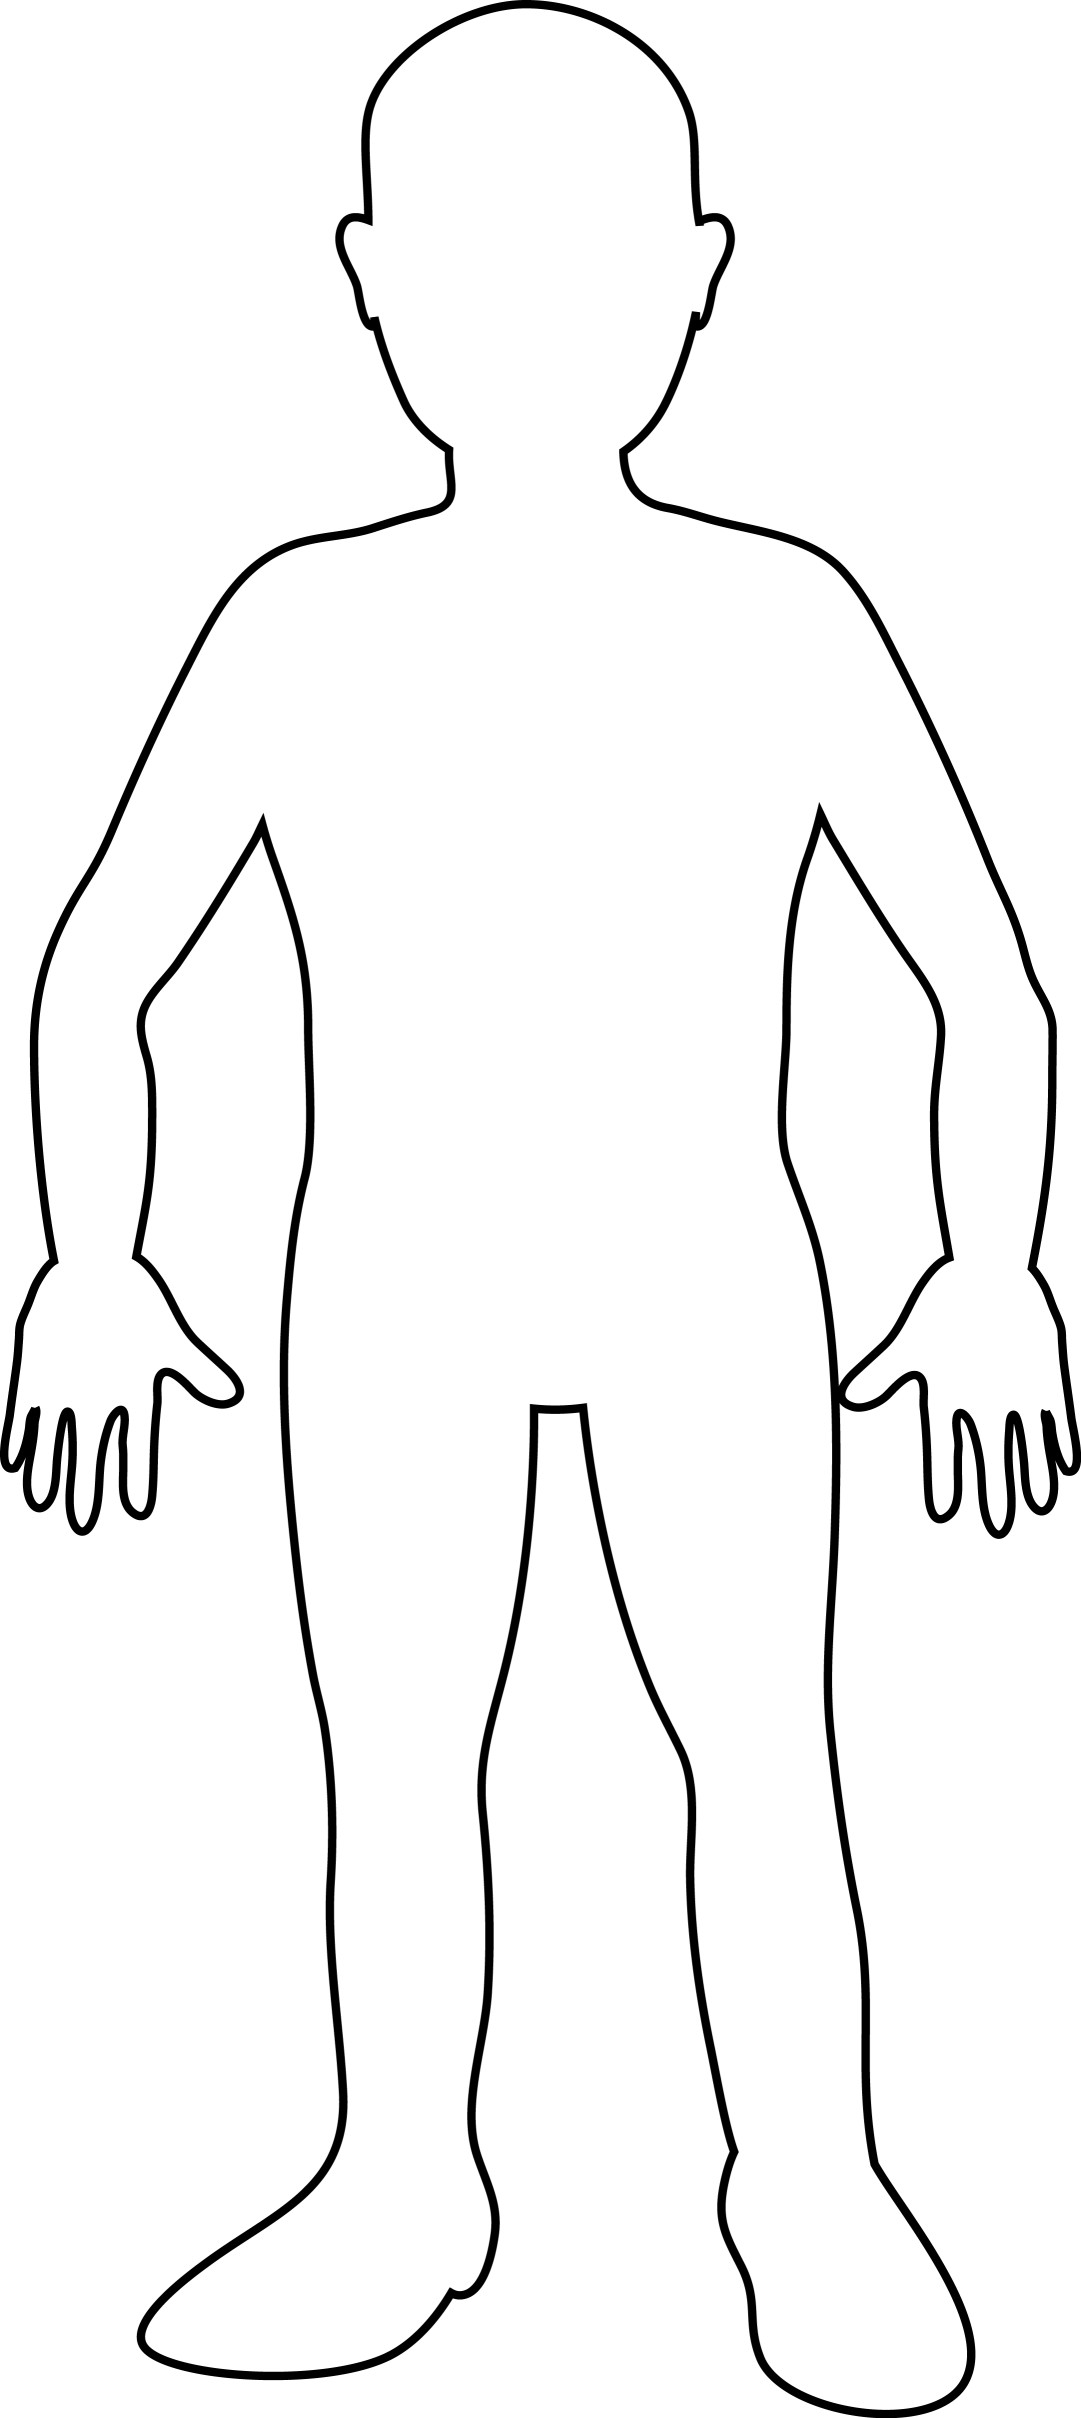 Human Body Outline Diagram 114 Human Body Outline Diagram